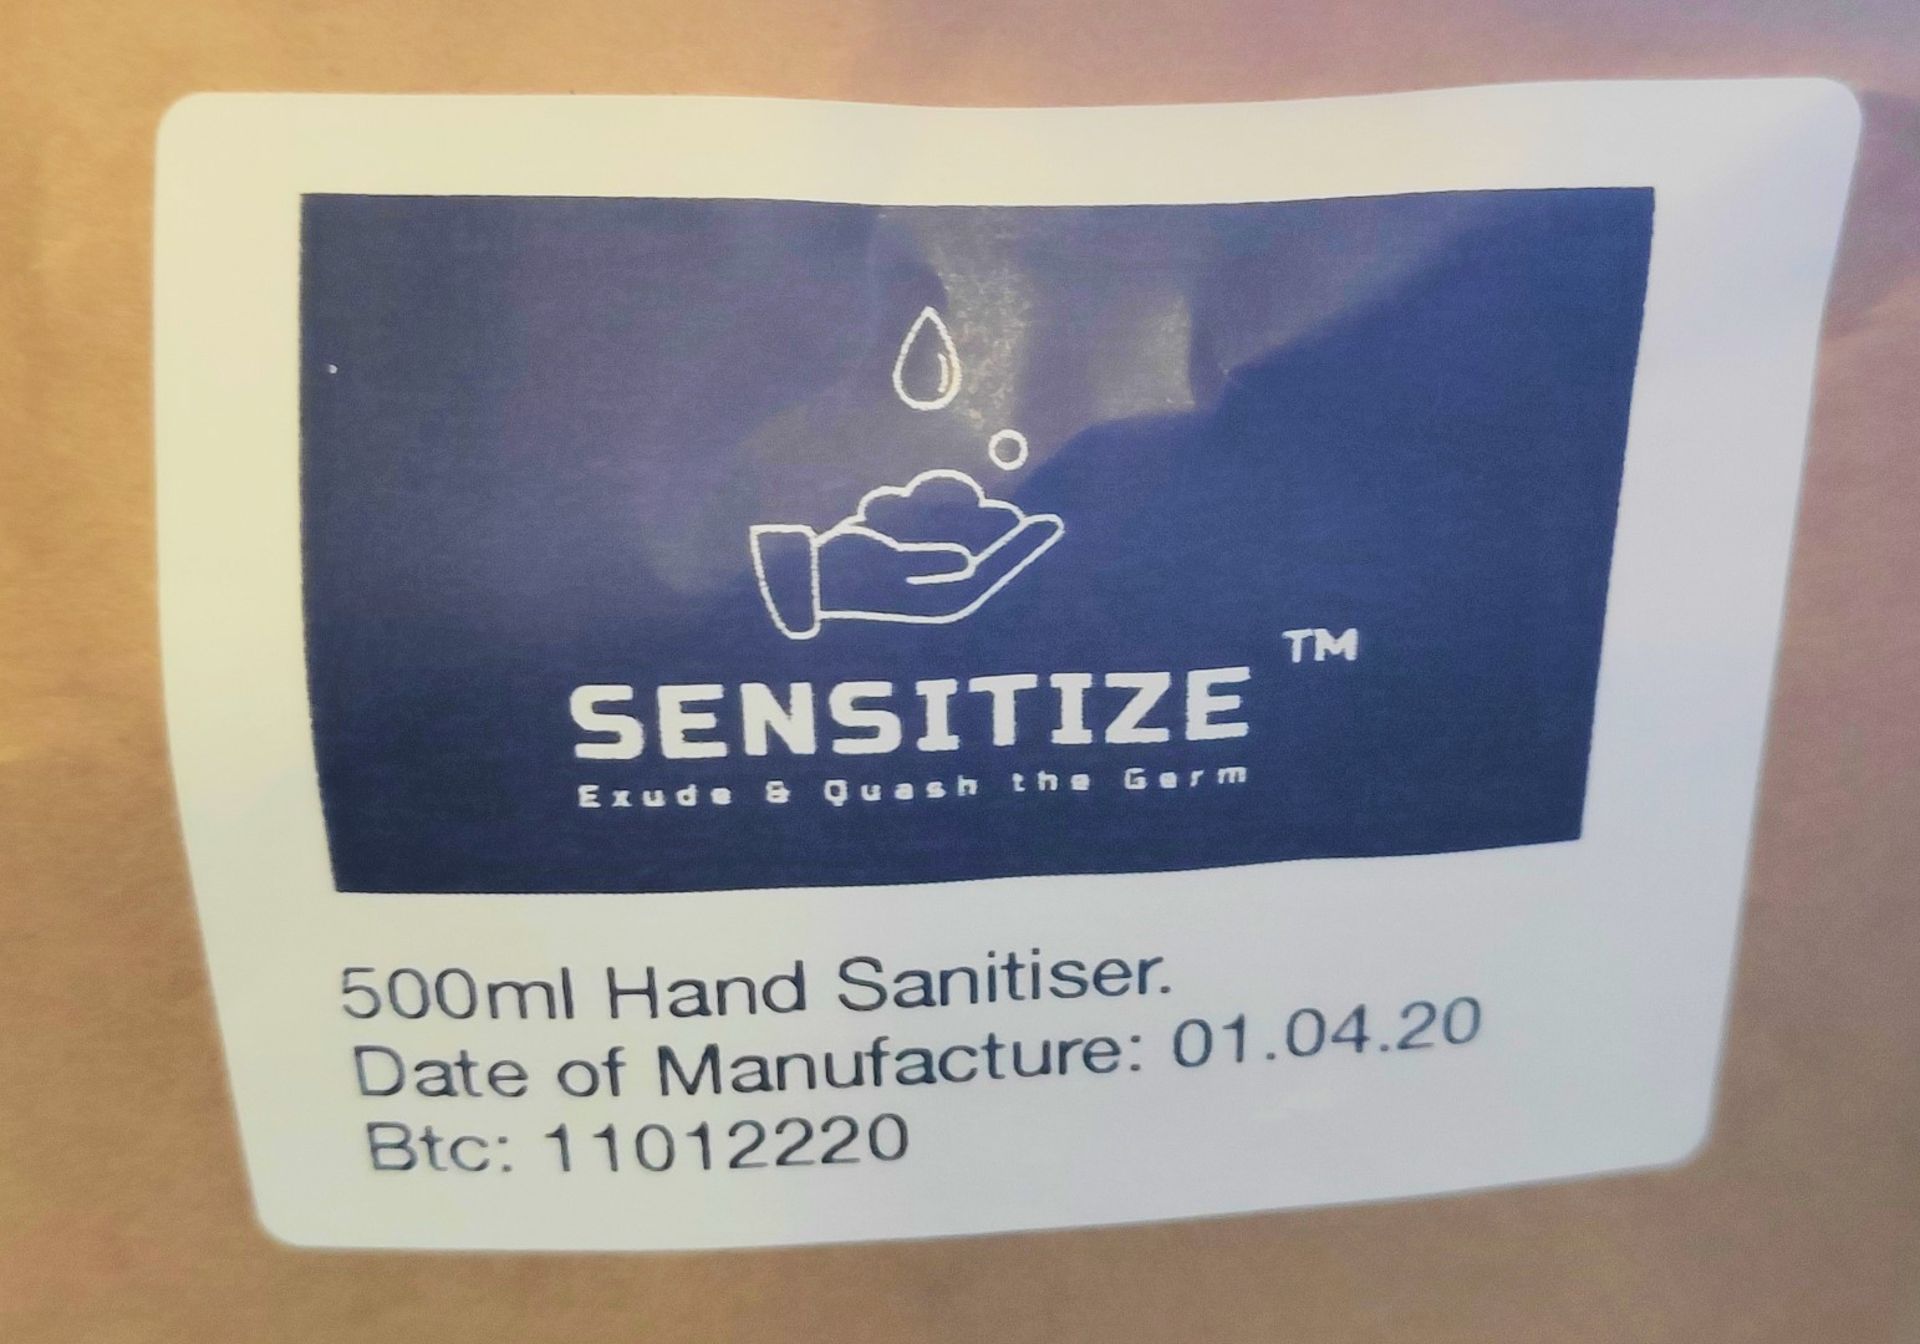 320 Pouches of Sensitize Hand Sanitizer - 500ml, 70% Alcohol, Hospital Grade Sanitizer - CL513 - - Image 3 of 4